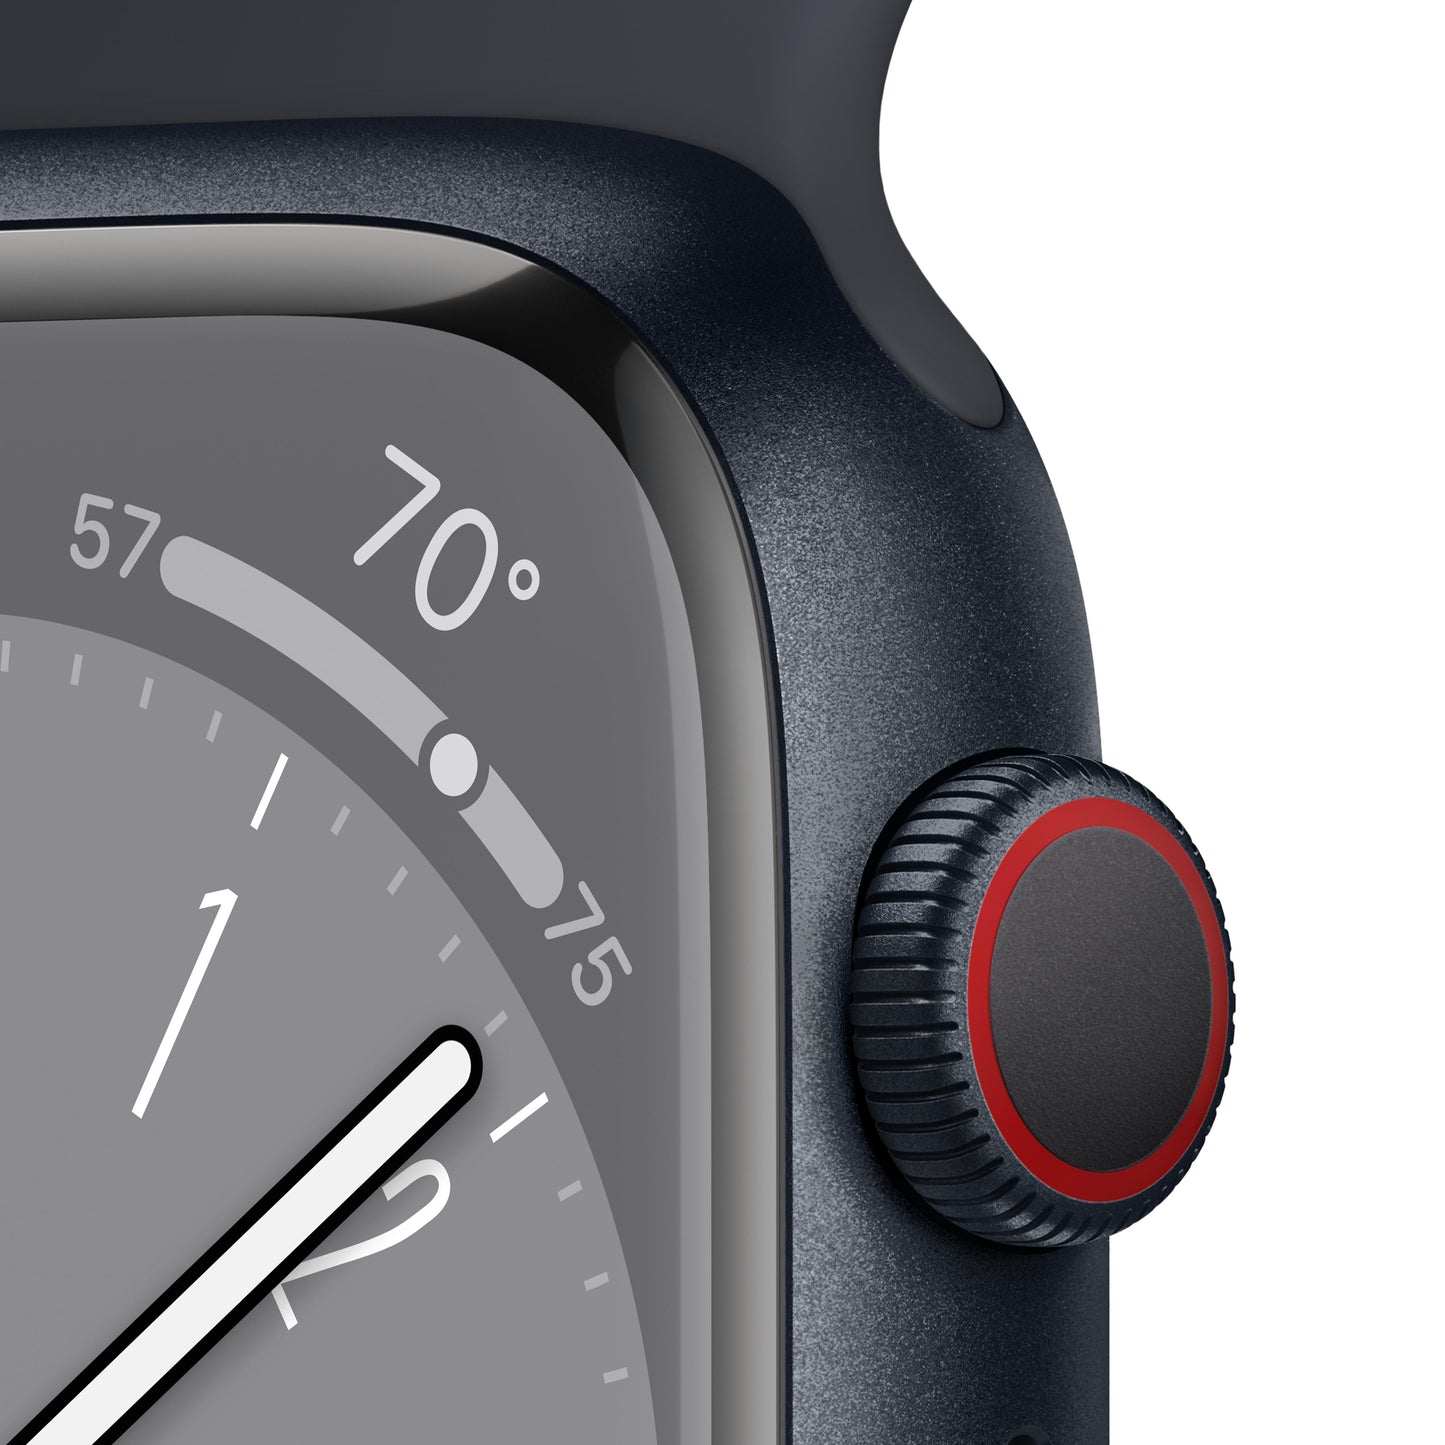 Apple Watch Series 8 GPS + Cellular 45mm Midnight Aluminium Case with Midnight Sport Band - Regular